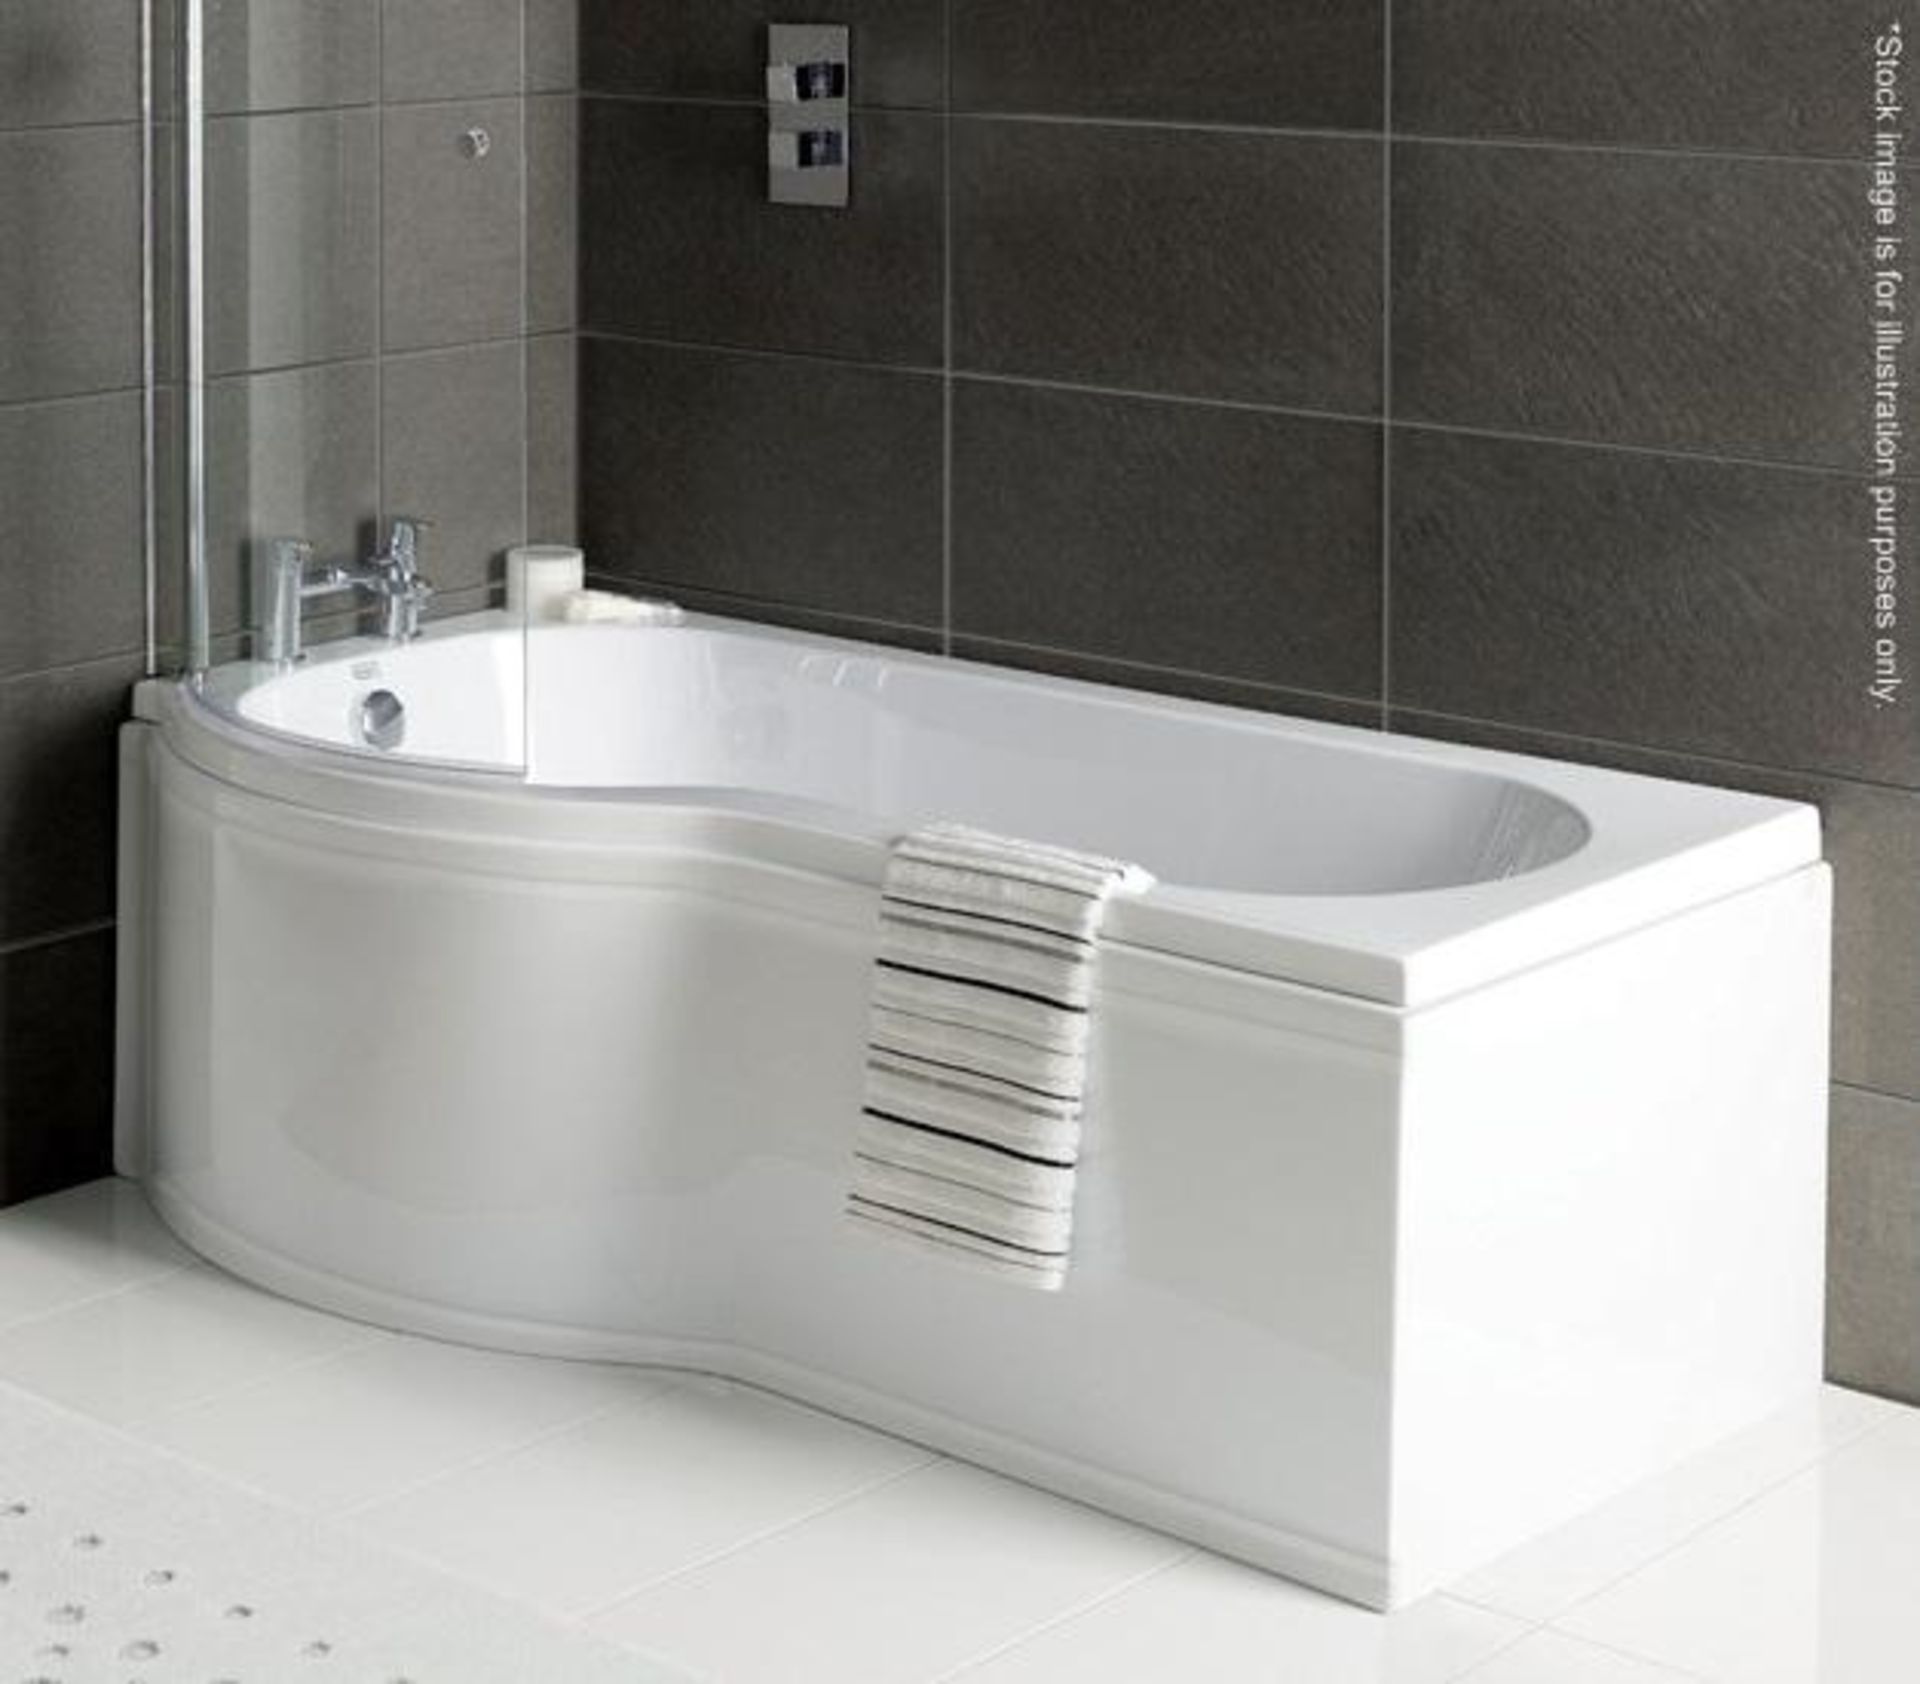 1 x Arley 'KURV2' P-Shape Shower Bath & Front Panel - Dimensions: 1700 x 850mm - New / Unused Stock